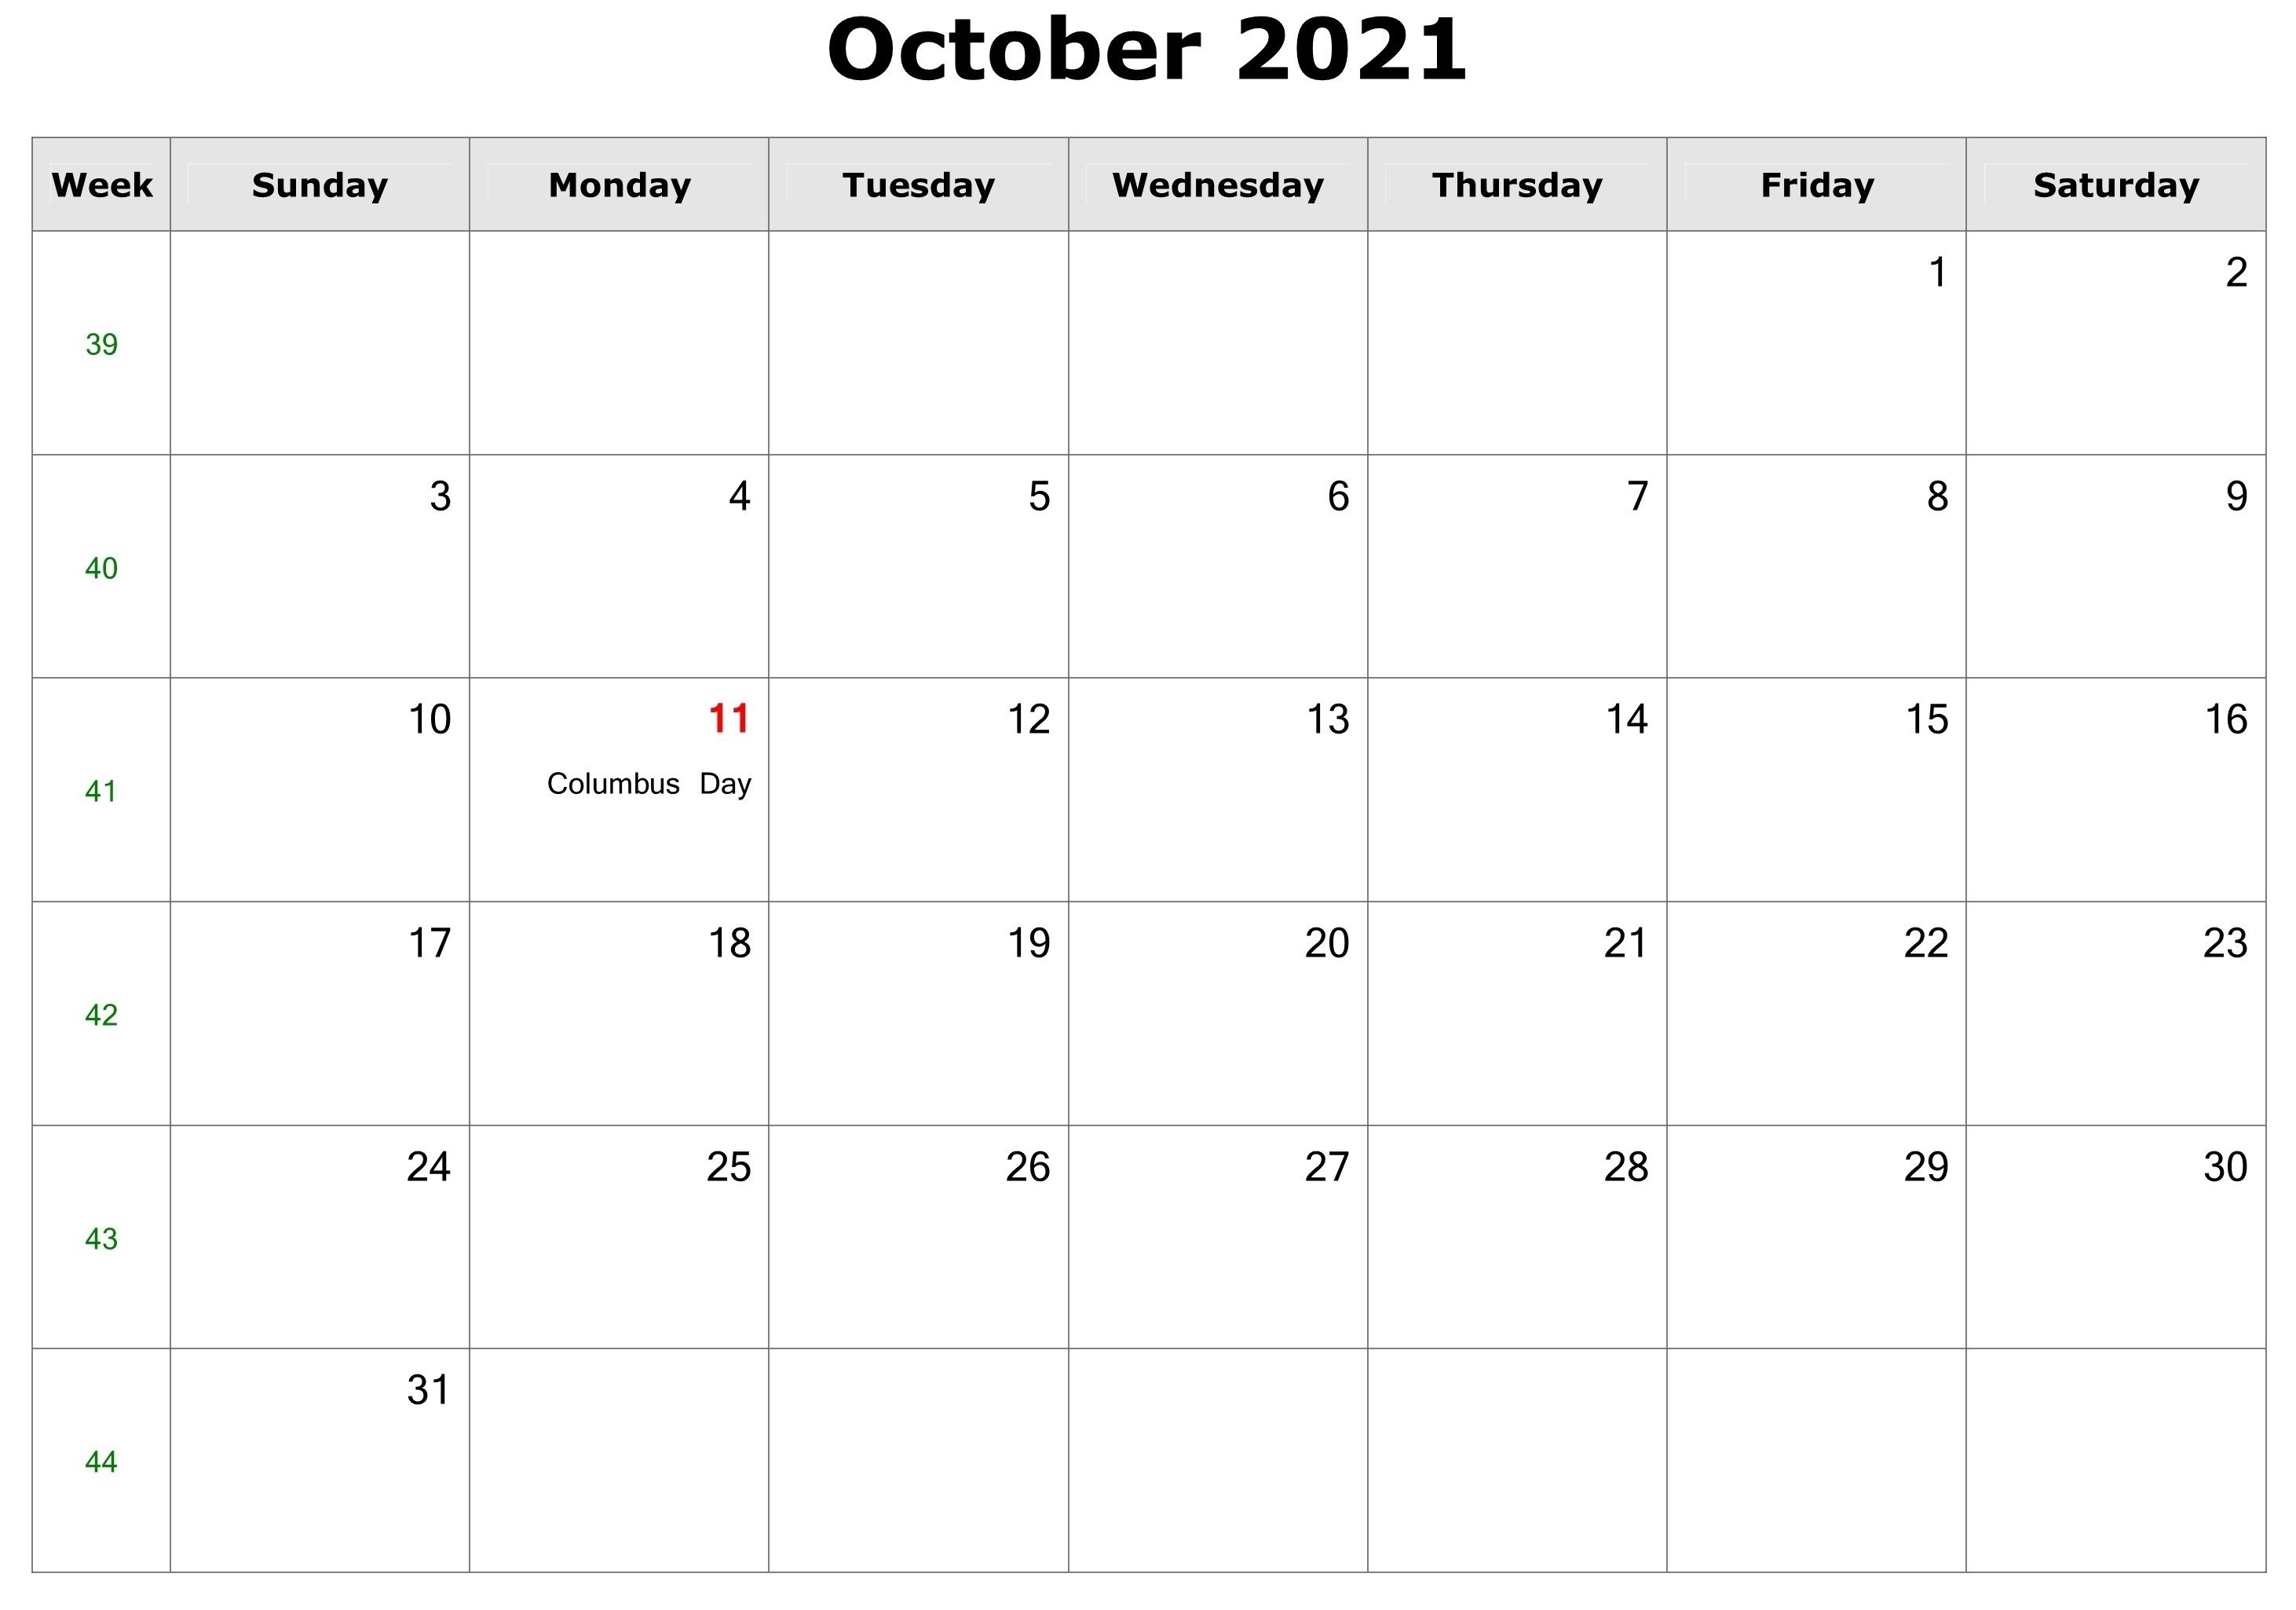 October 2021 Calendar - Free Download Printable Calendar Templates October 2021 Full Moon Calendar